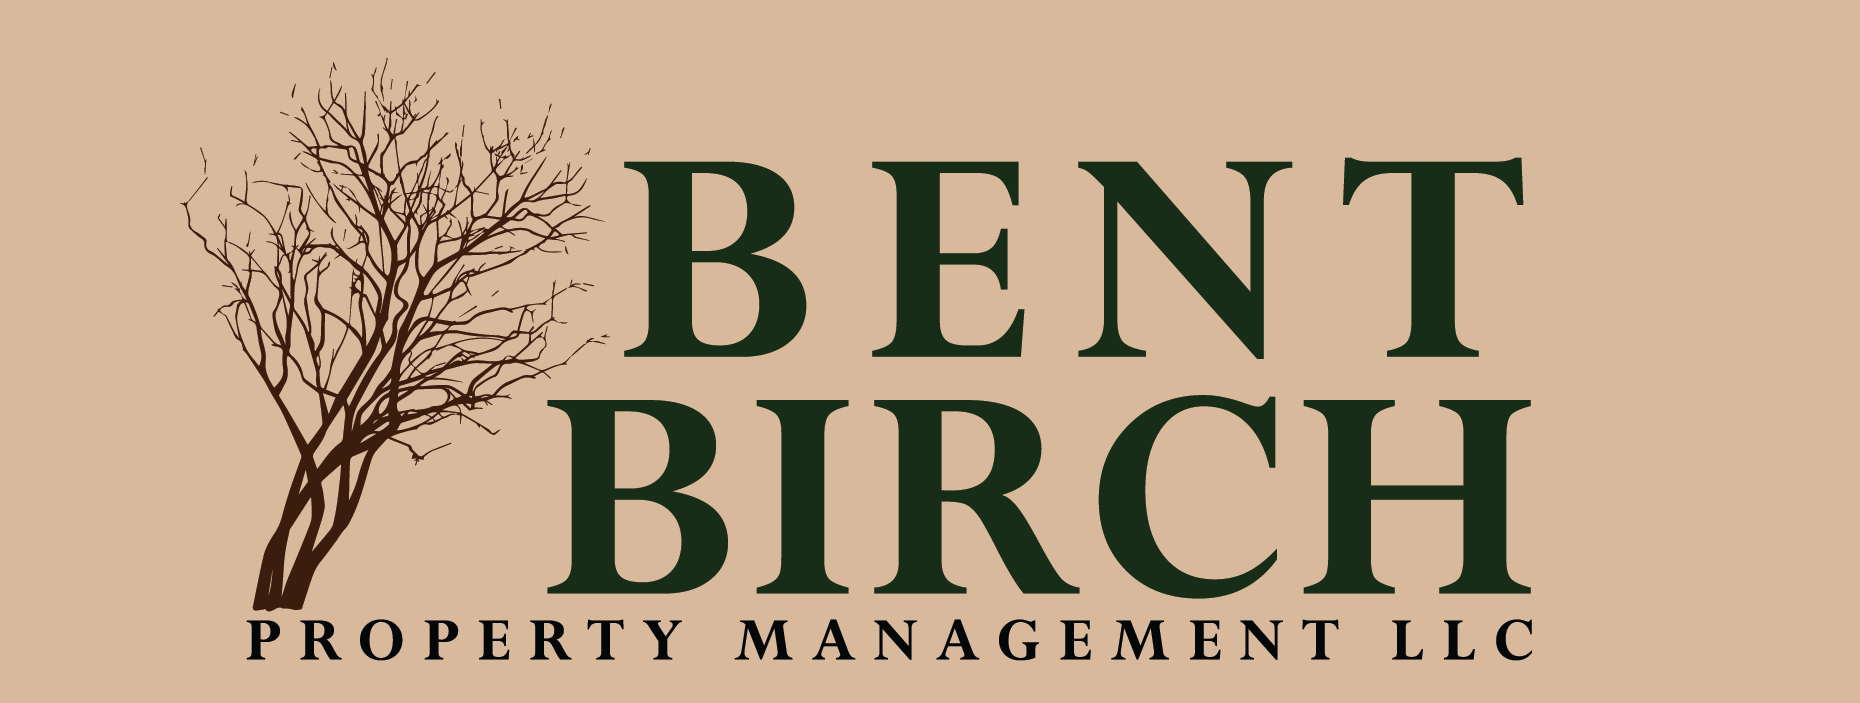 Bent Birch Property Management LLC